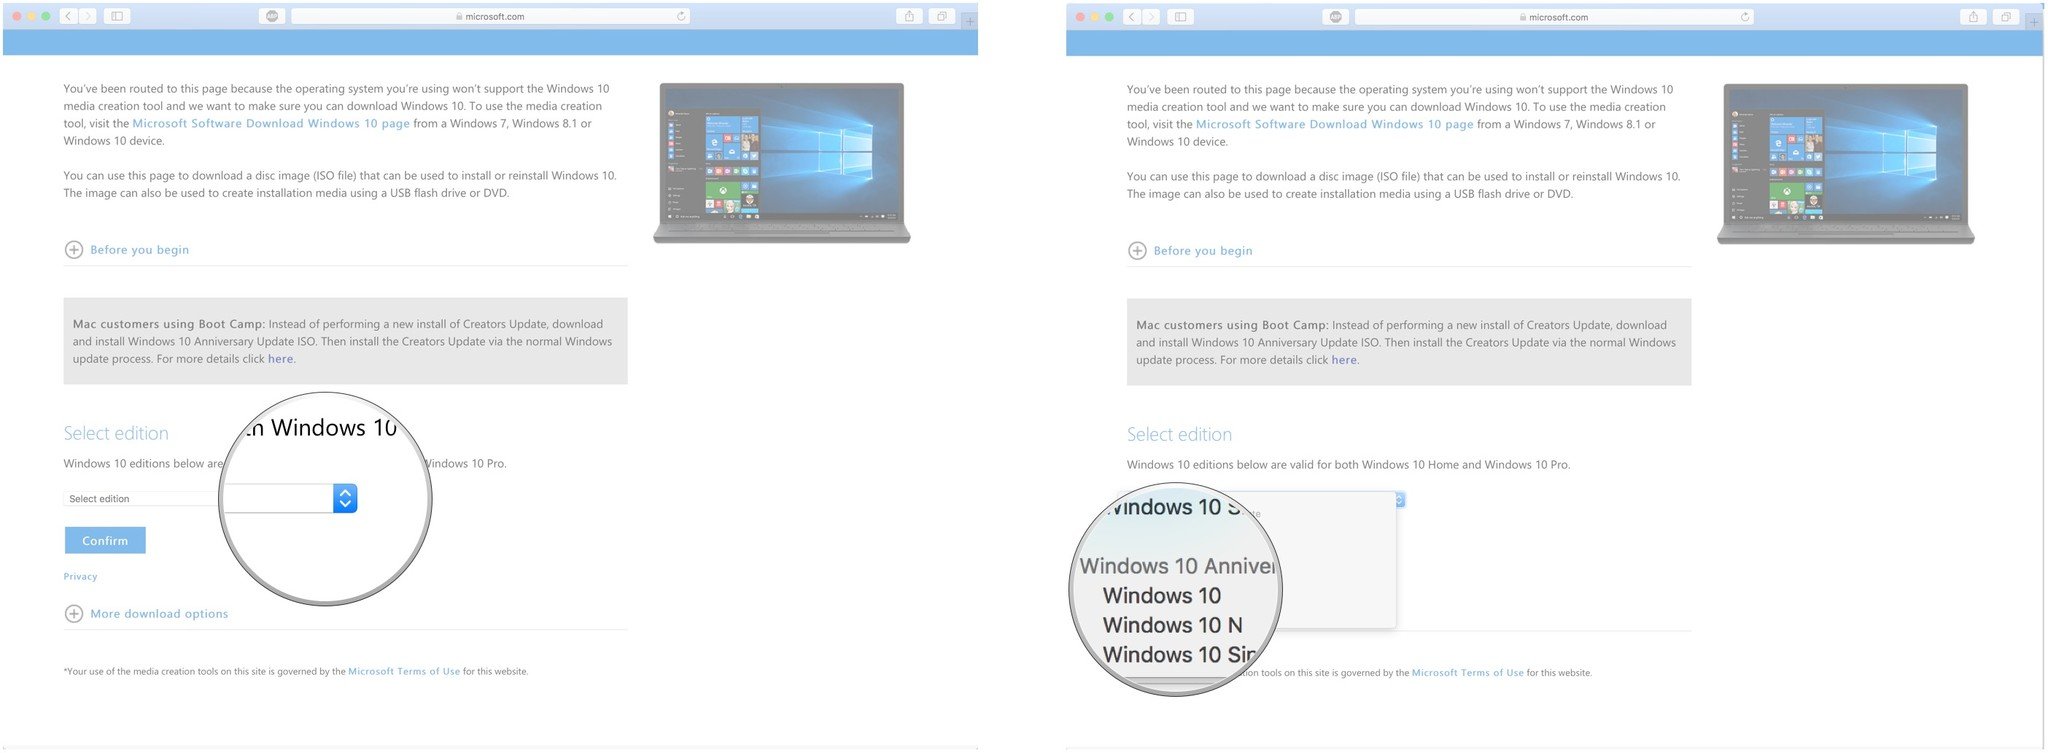 Click the dropdown menu below Select edition. Click Windows 10 below Anniversary Update.